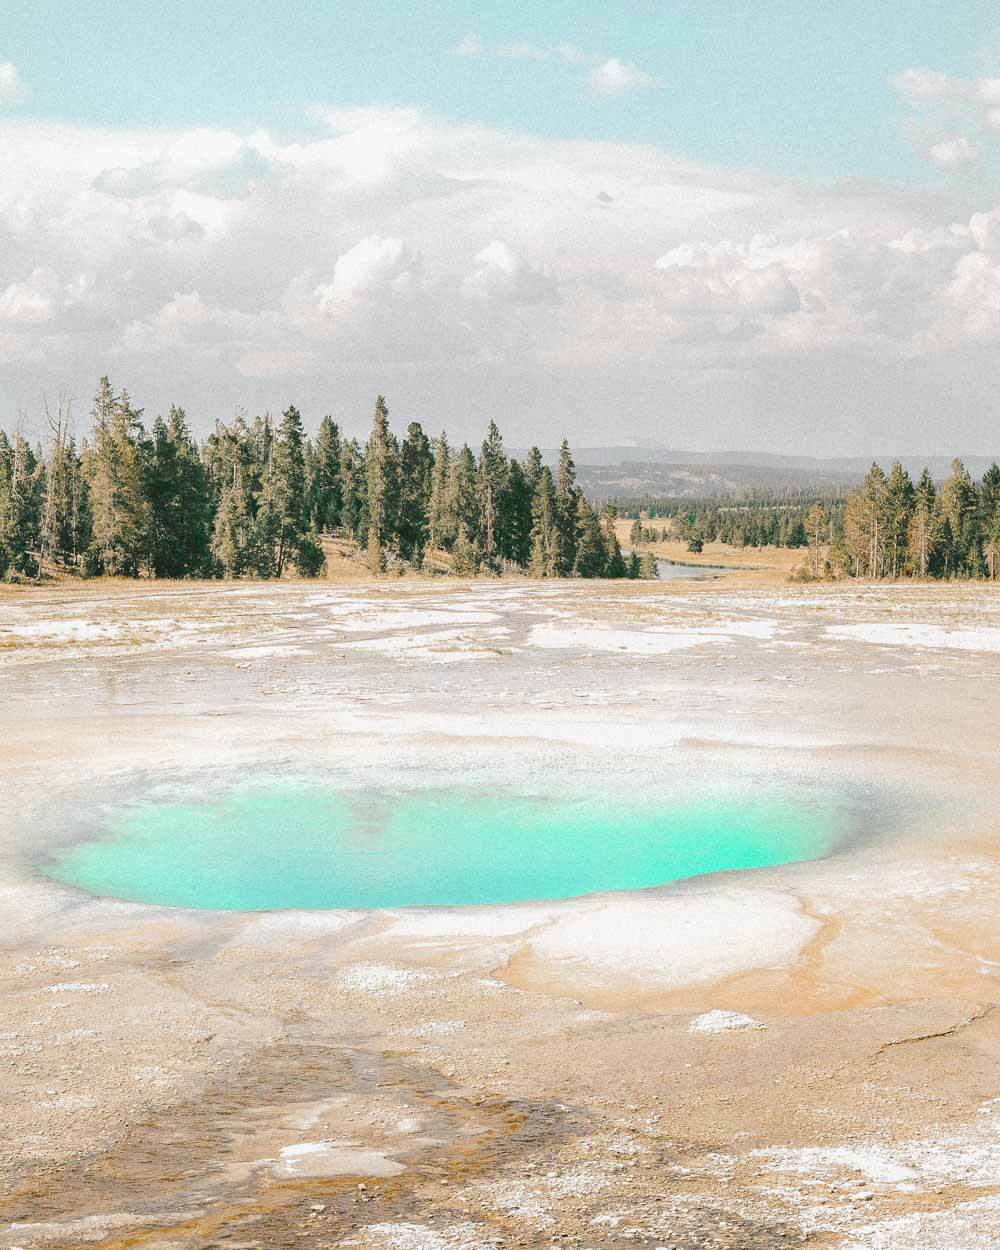 opal pool at Yellowstone national park 